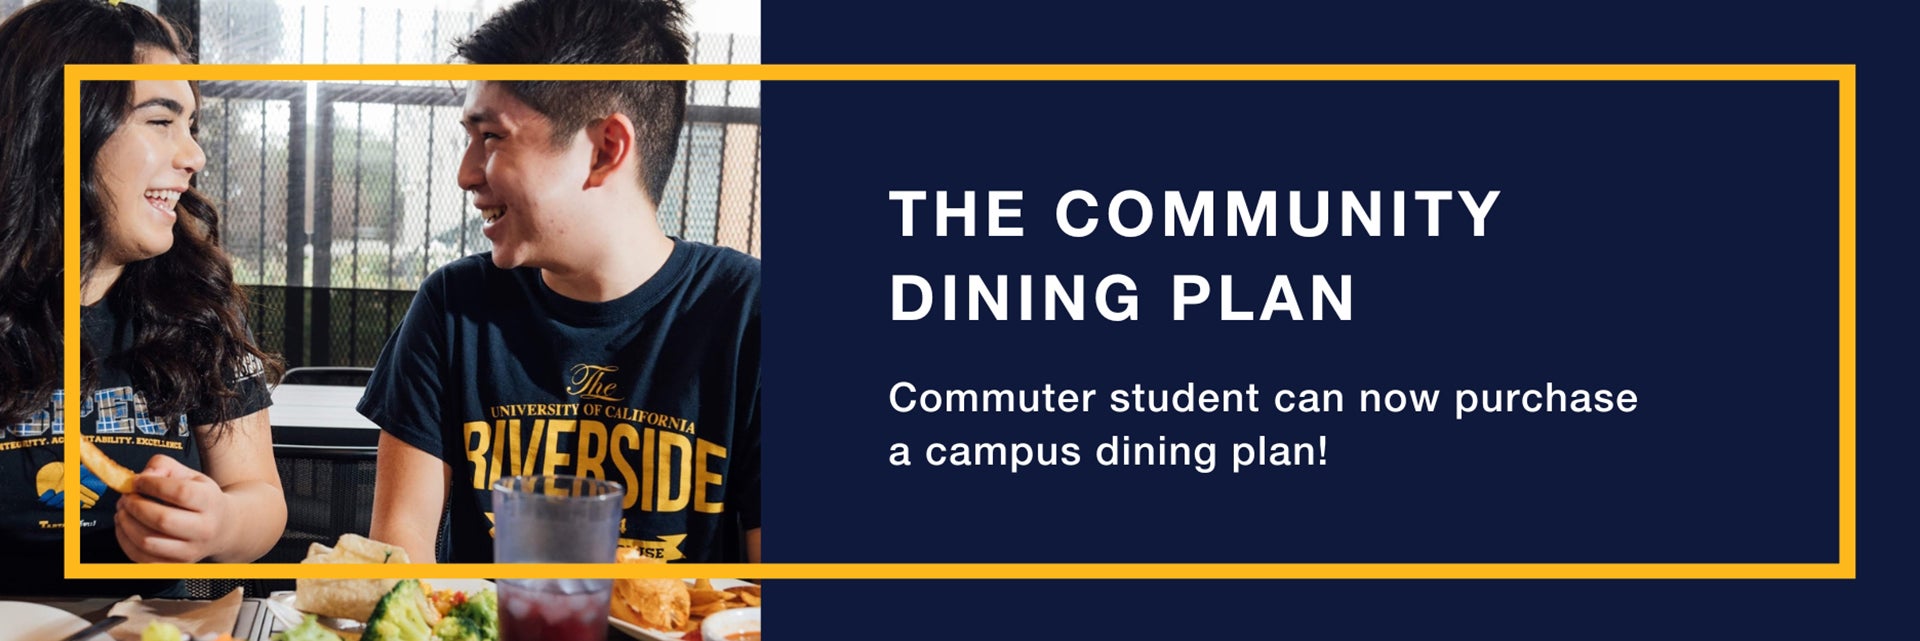 The Community Dining Plan